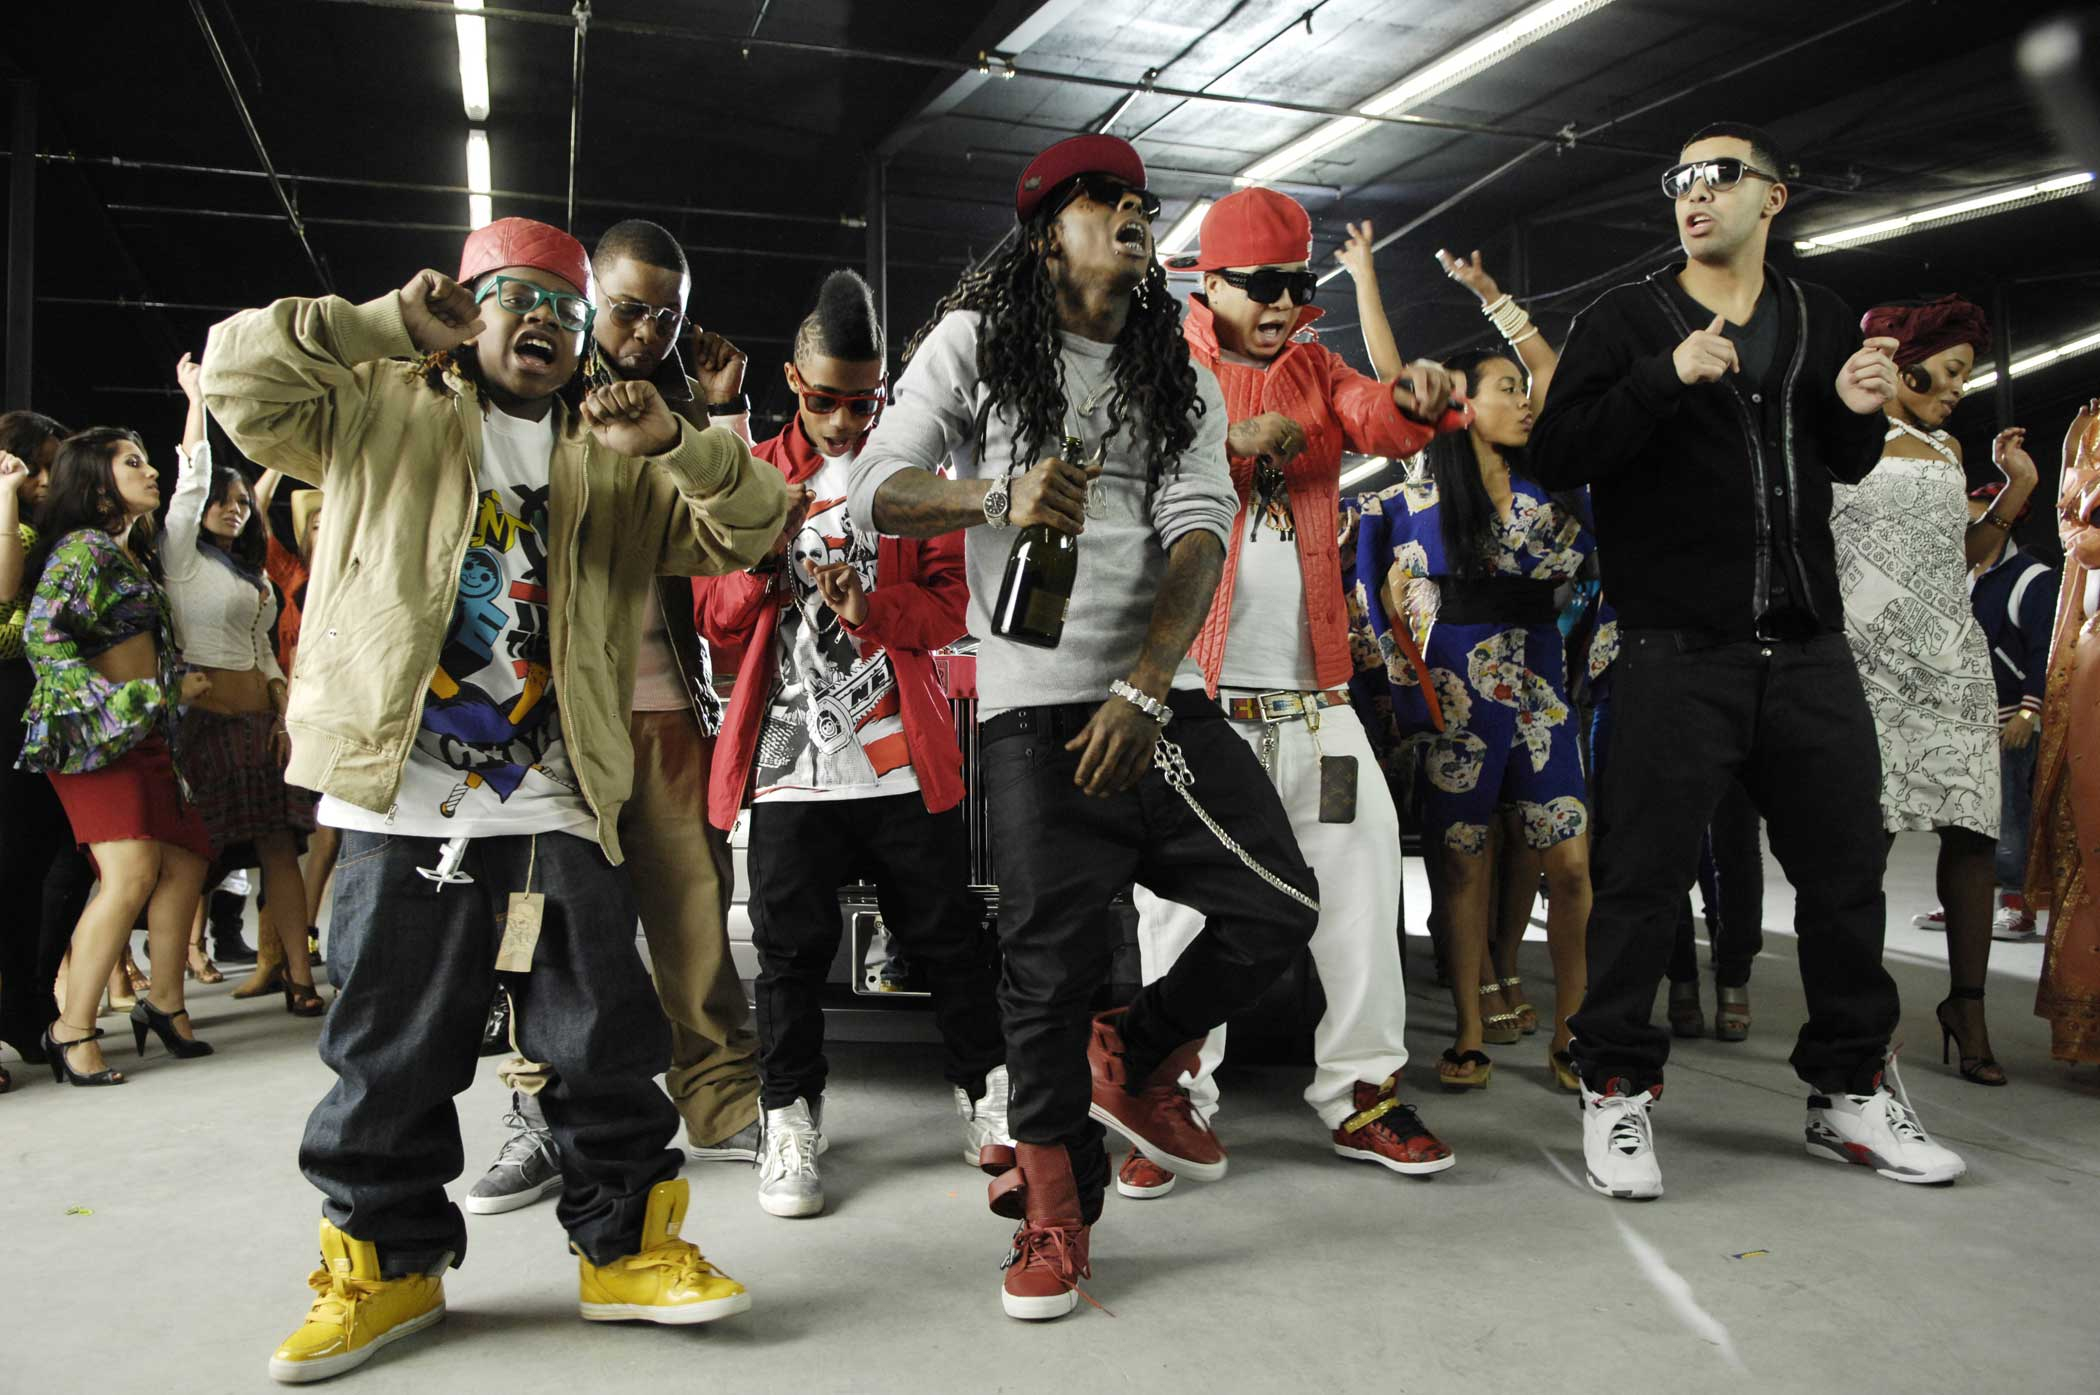 Lil Wayne "Every Girl" Music Video Shoot